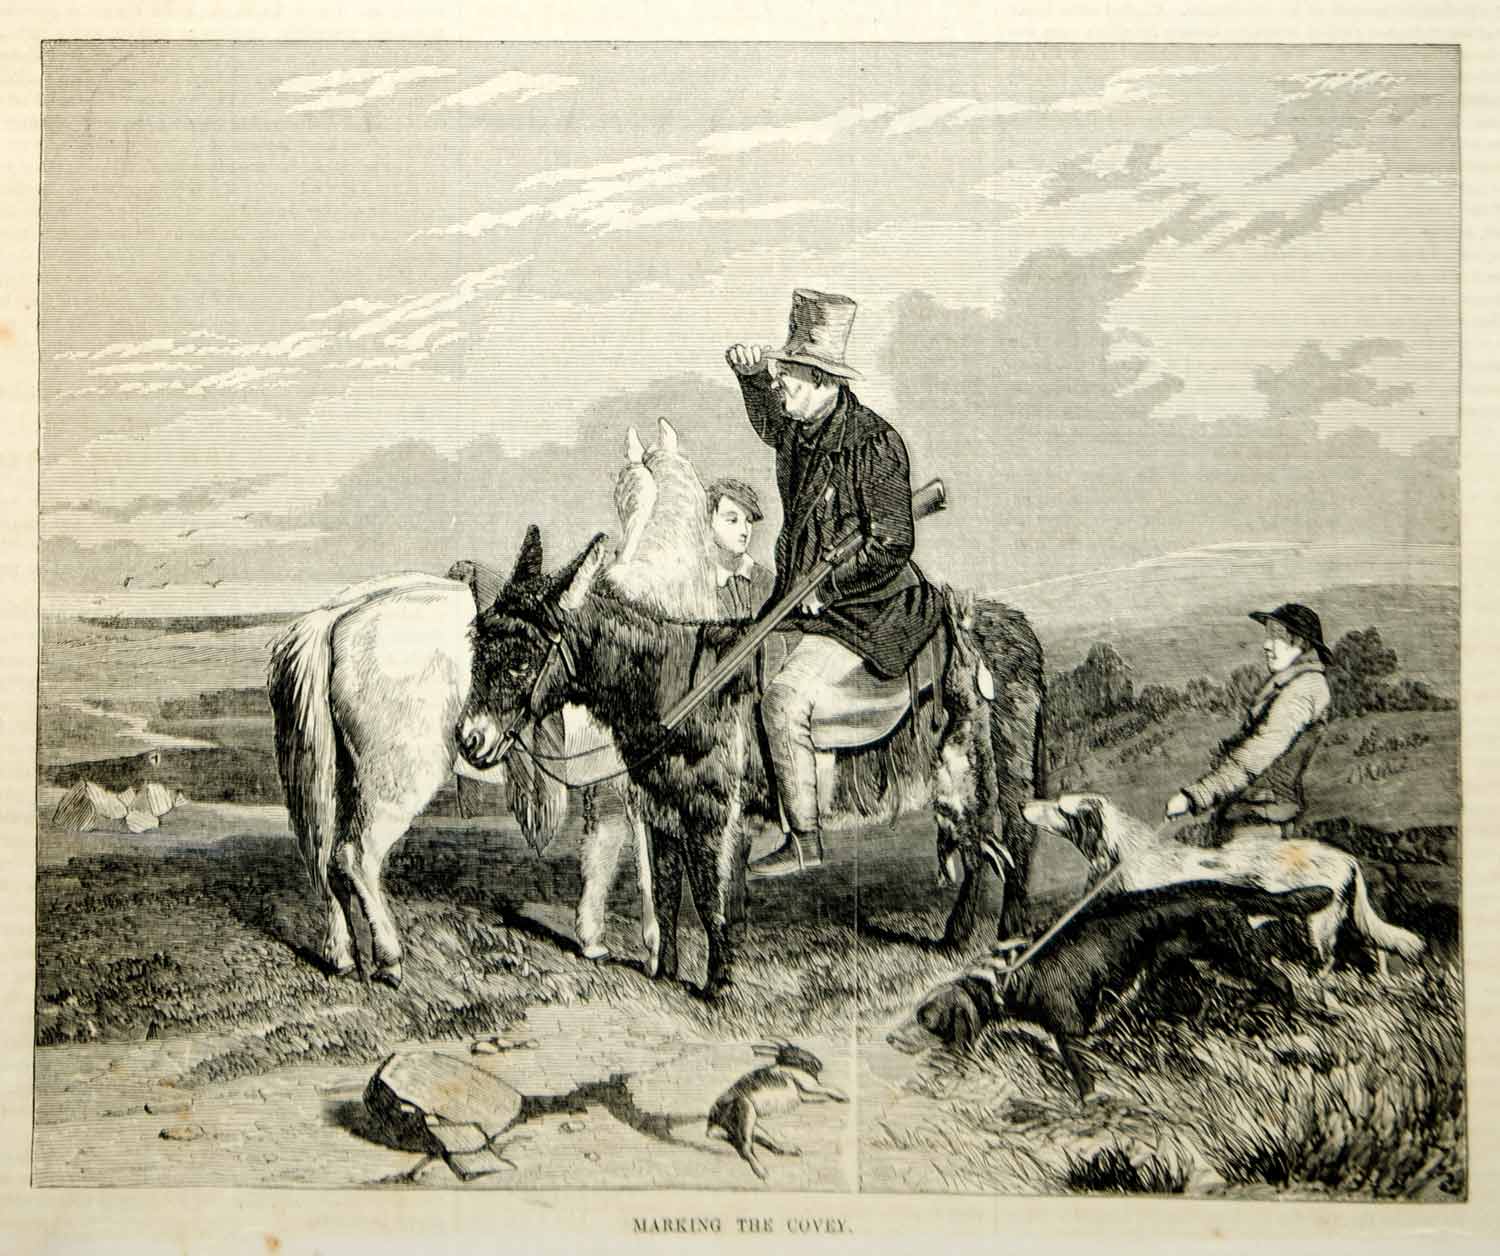 1854 Engraving Marking the Covey Harrry Hall Sporting Art Gamekeeper Hunting